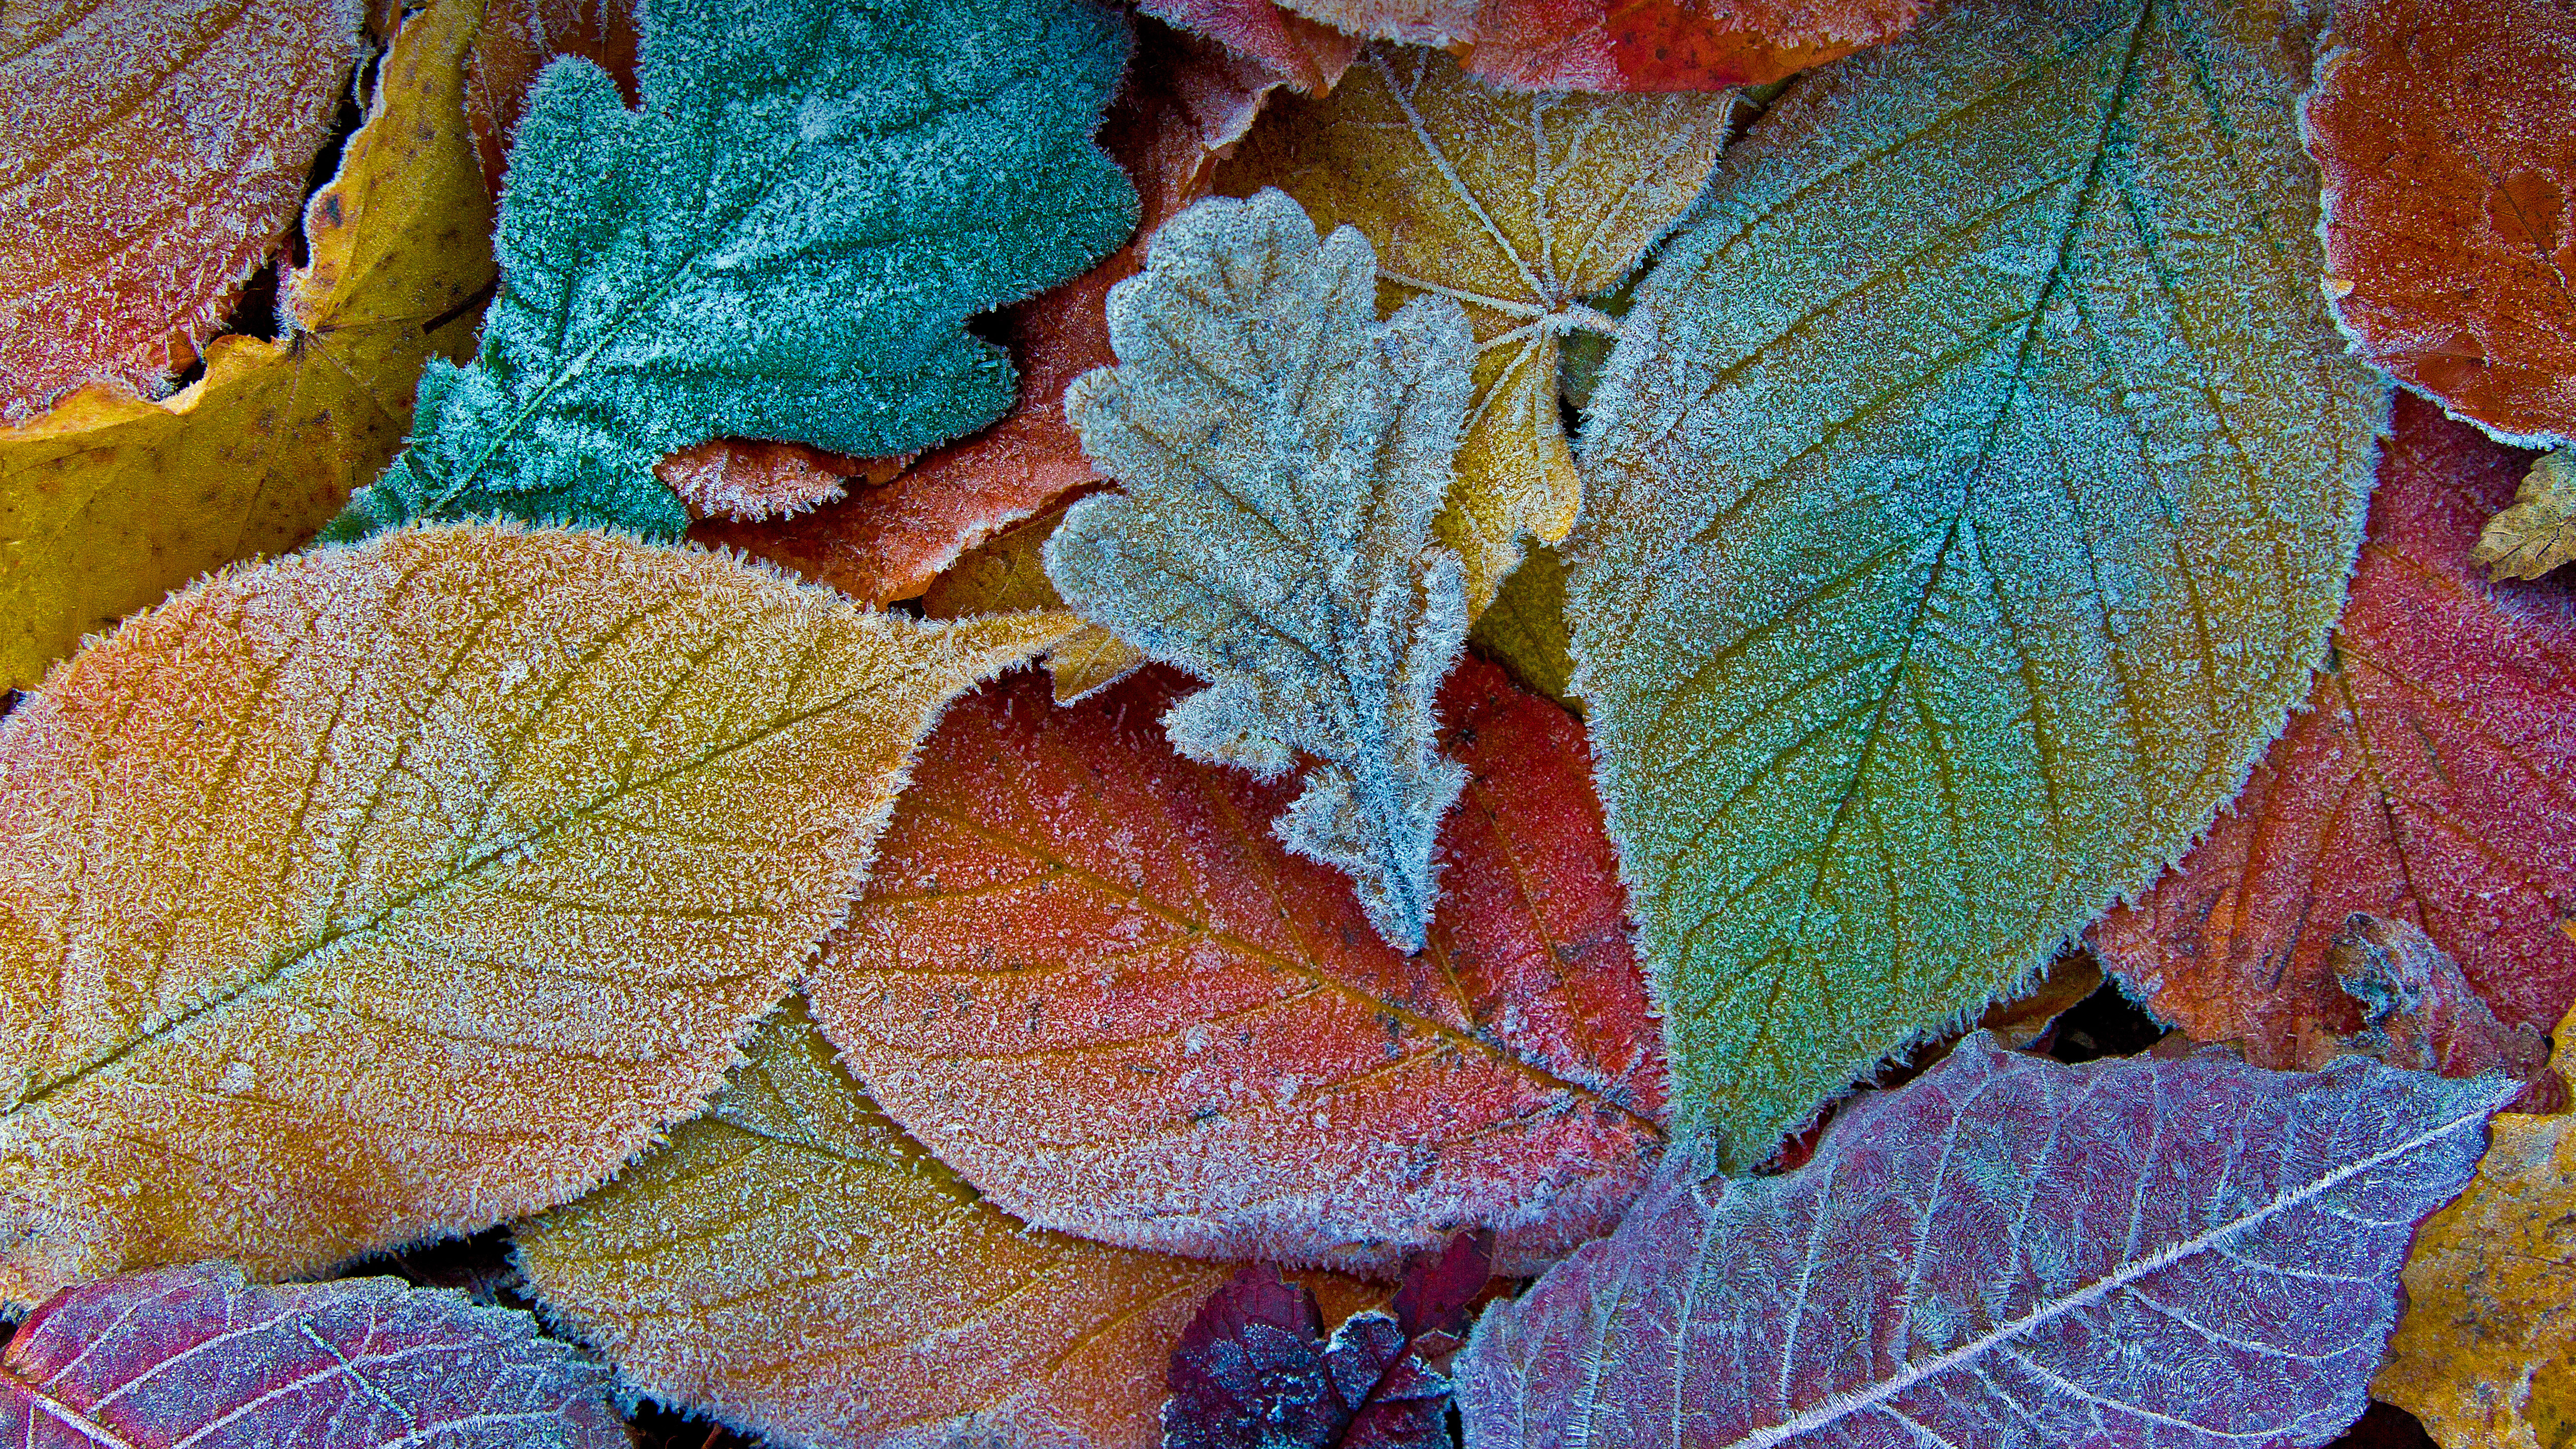 Frosted Leaf Wallpaper